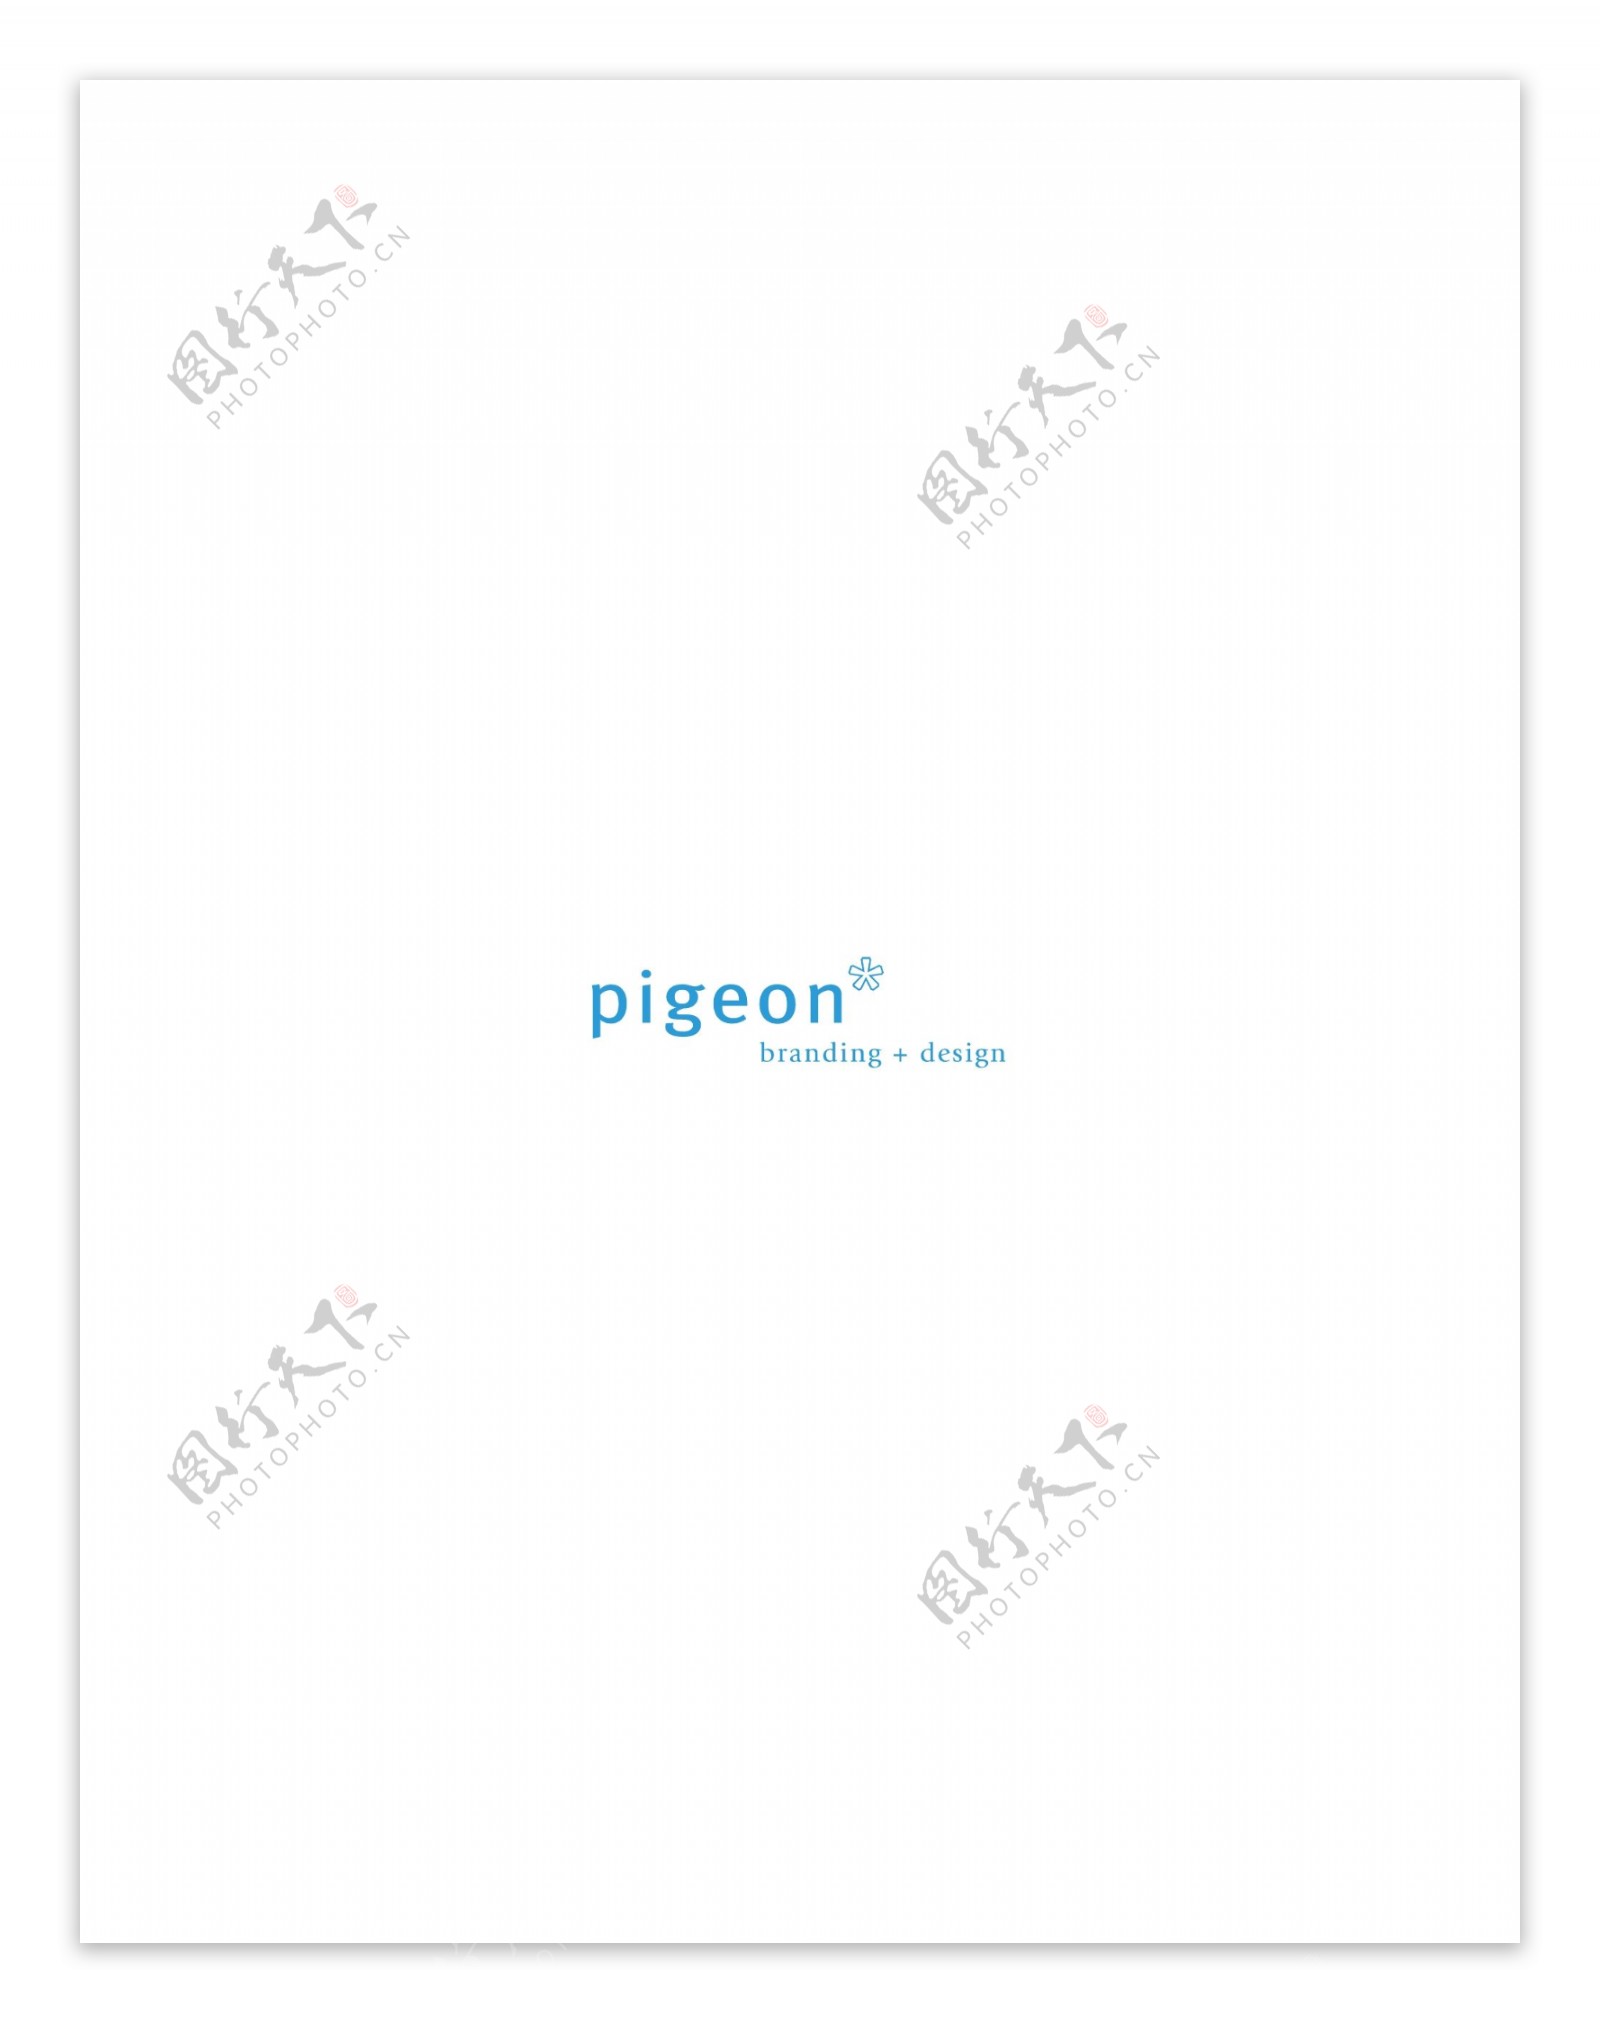 Pigeonlogo设计欣赏Pigeon广告公司LOGO下载标志设计欣赏